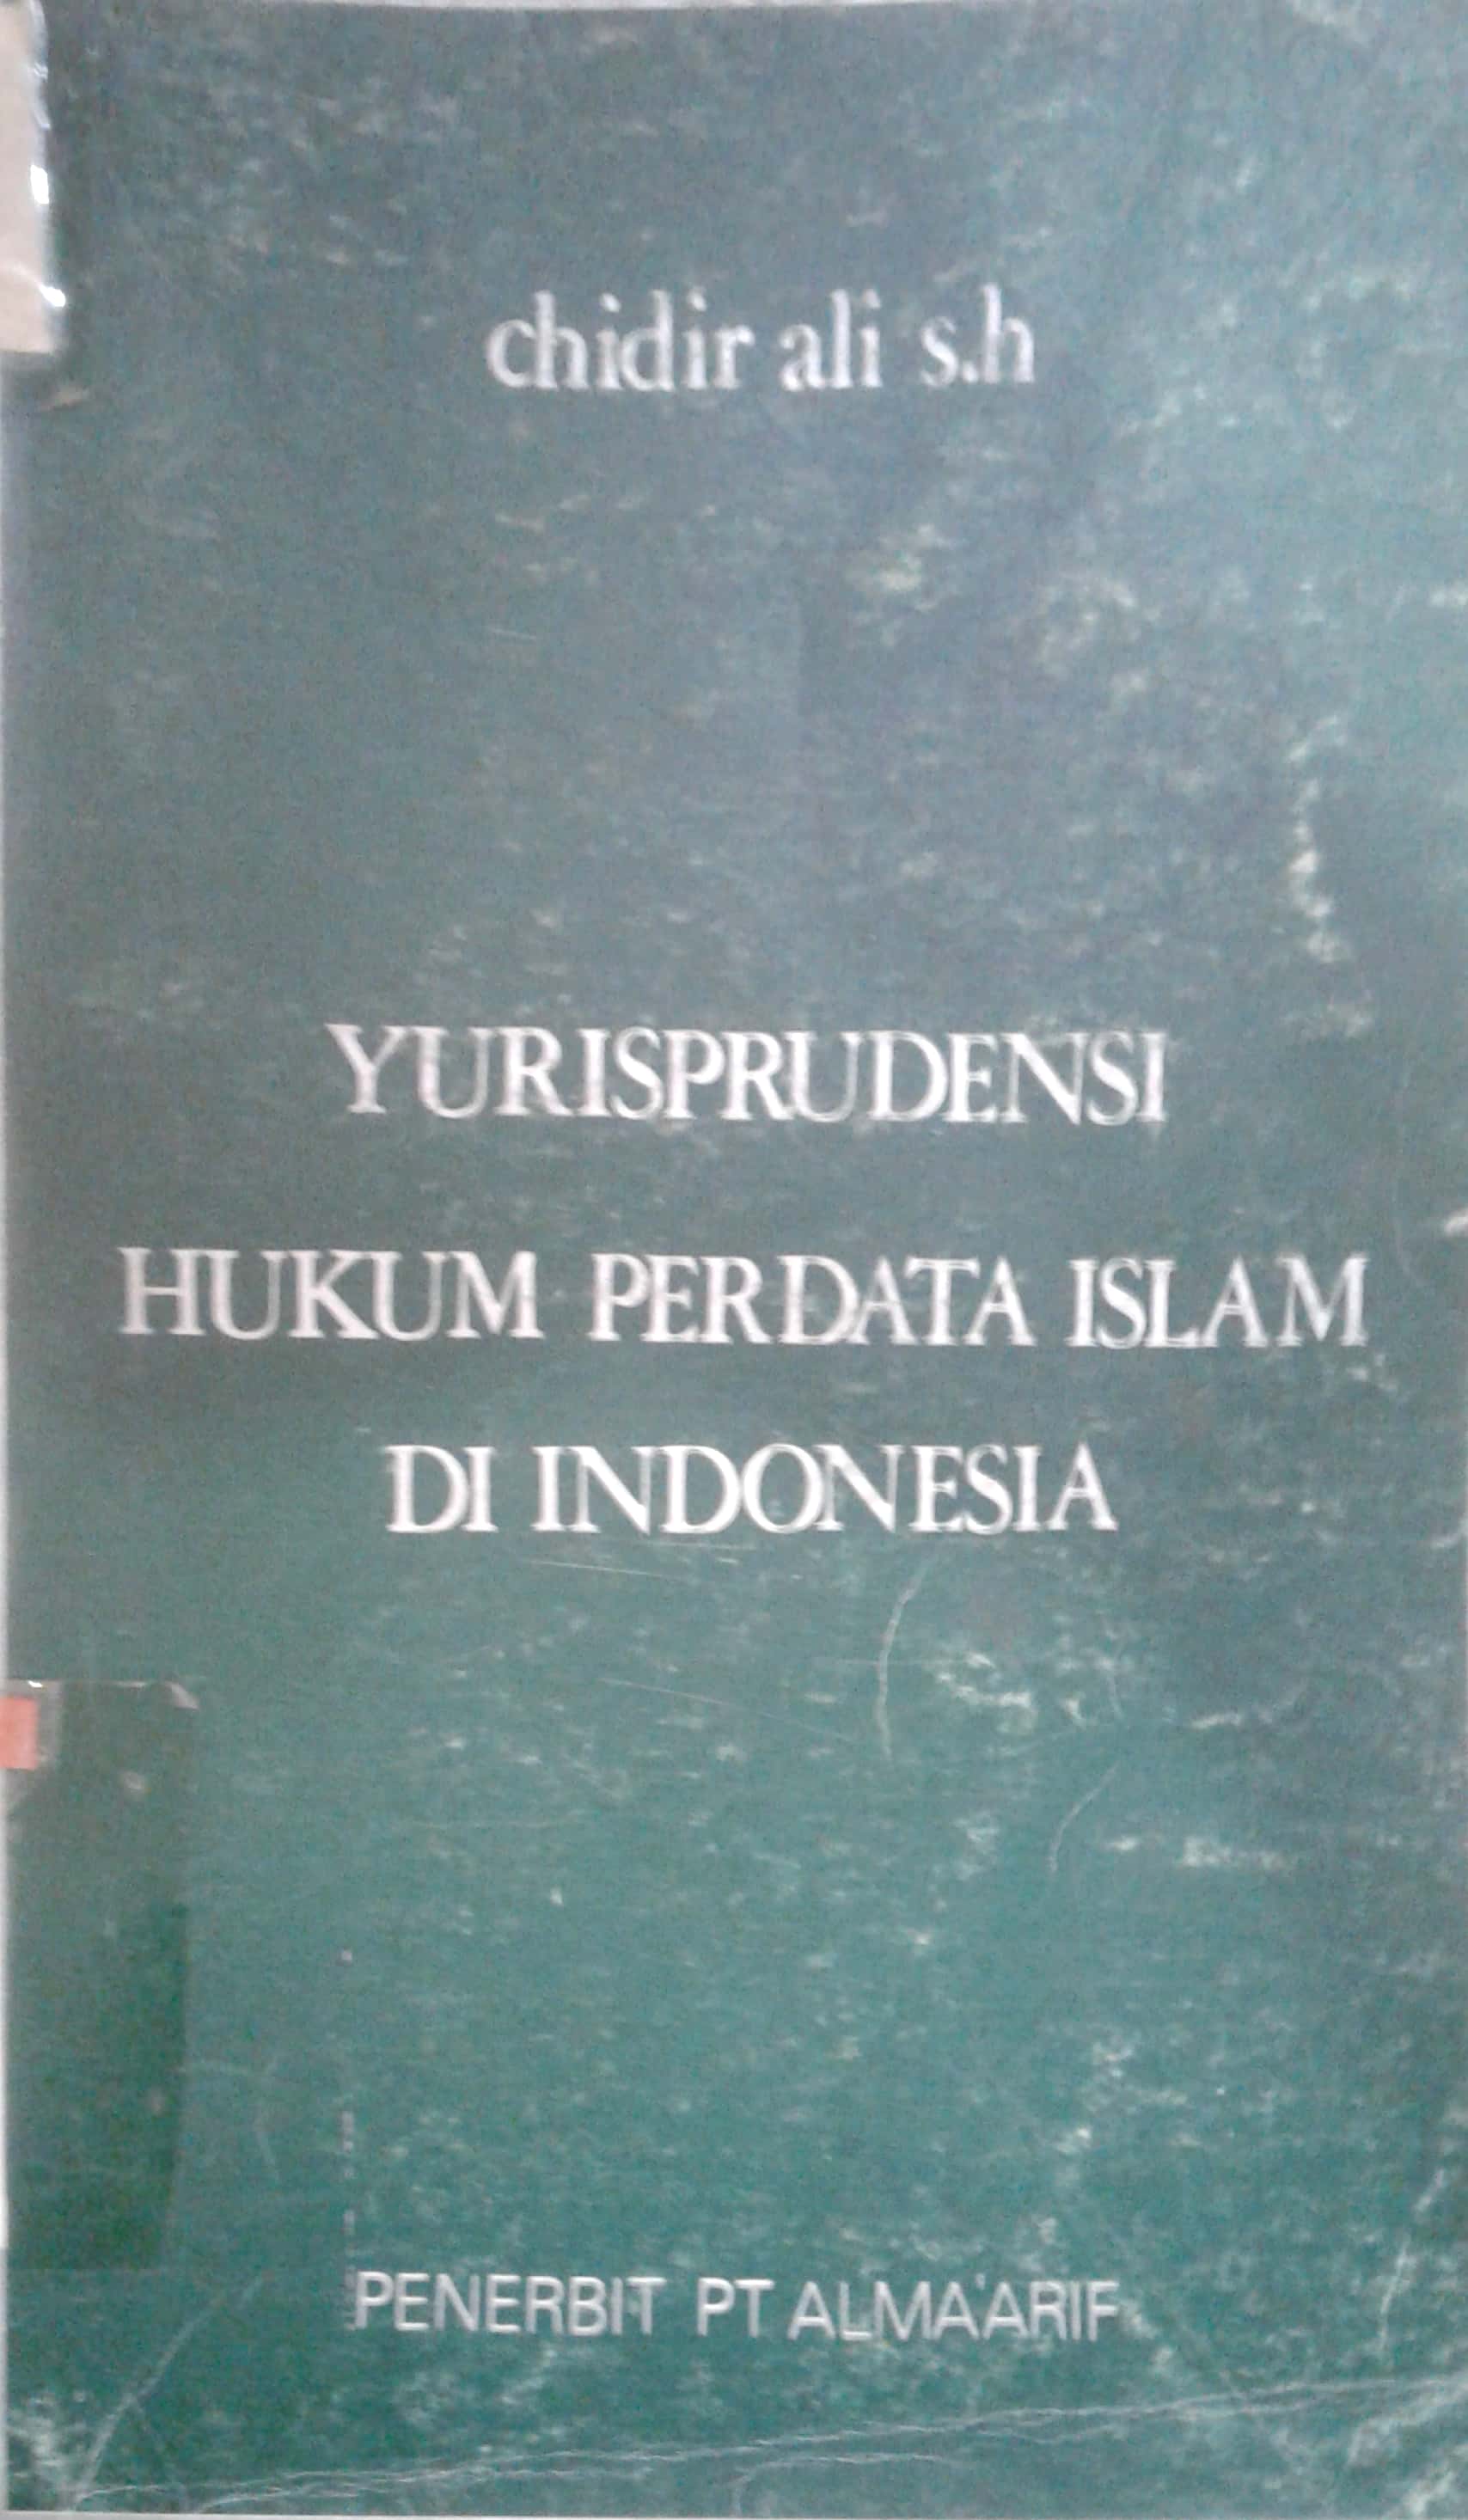 Yurisprudensi hukum perdata islam di indonesia